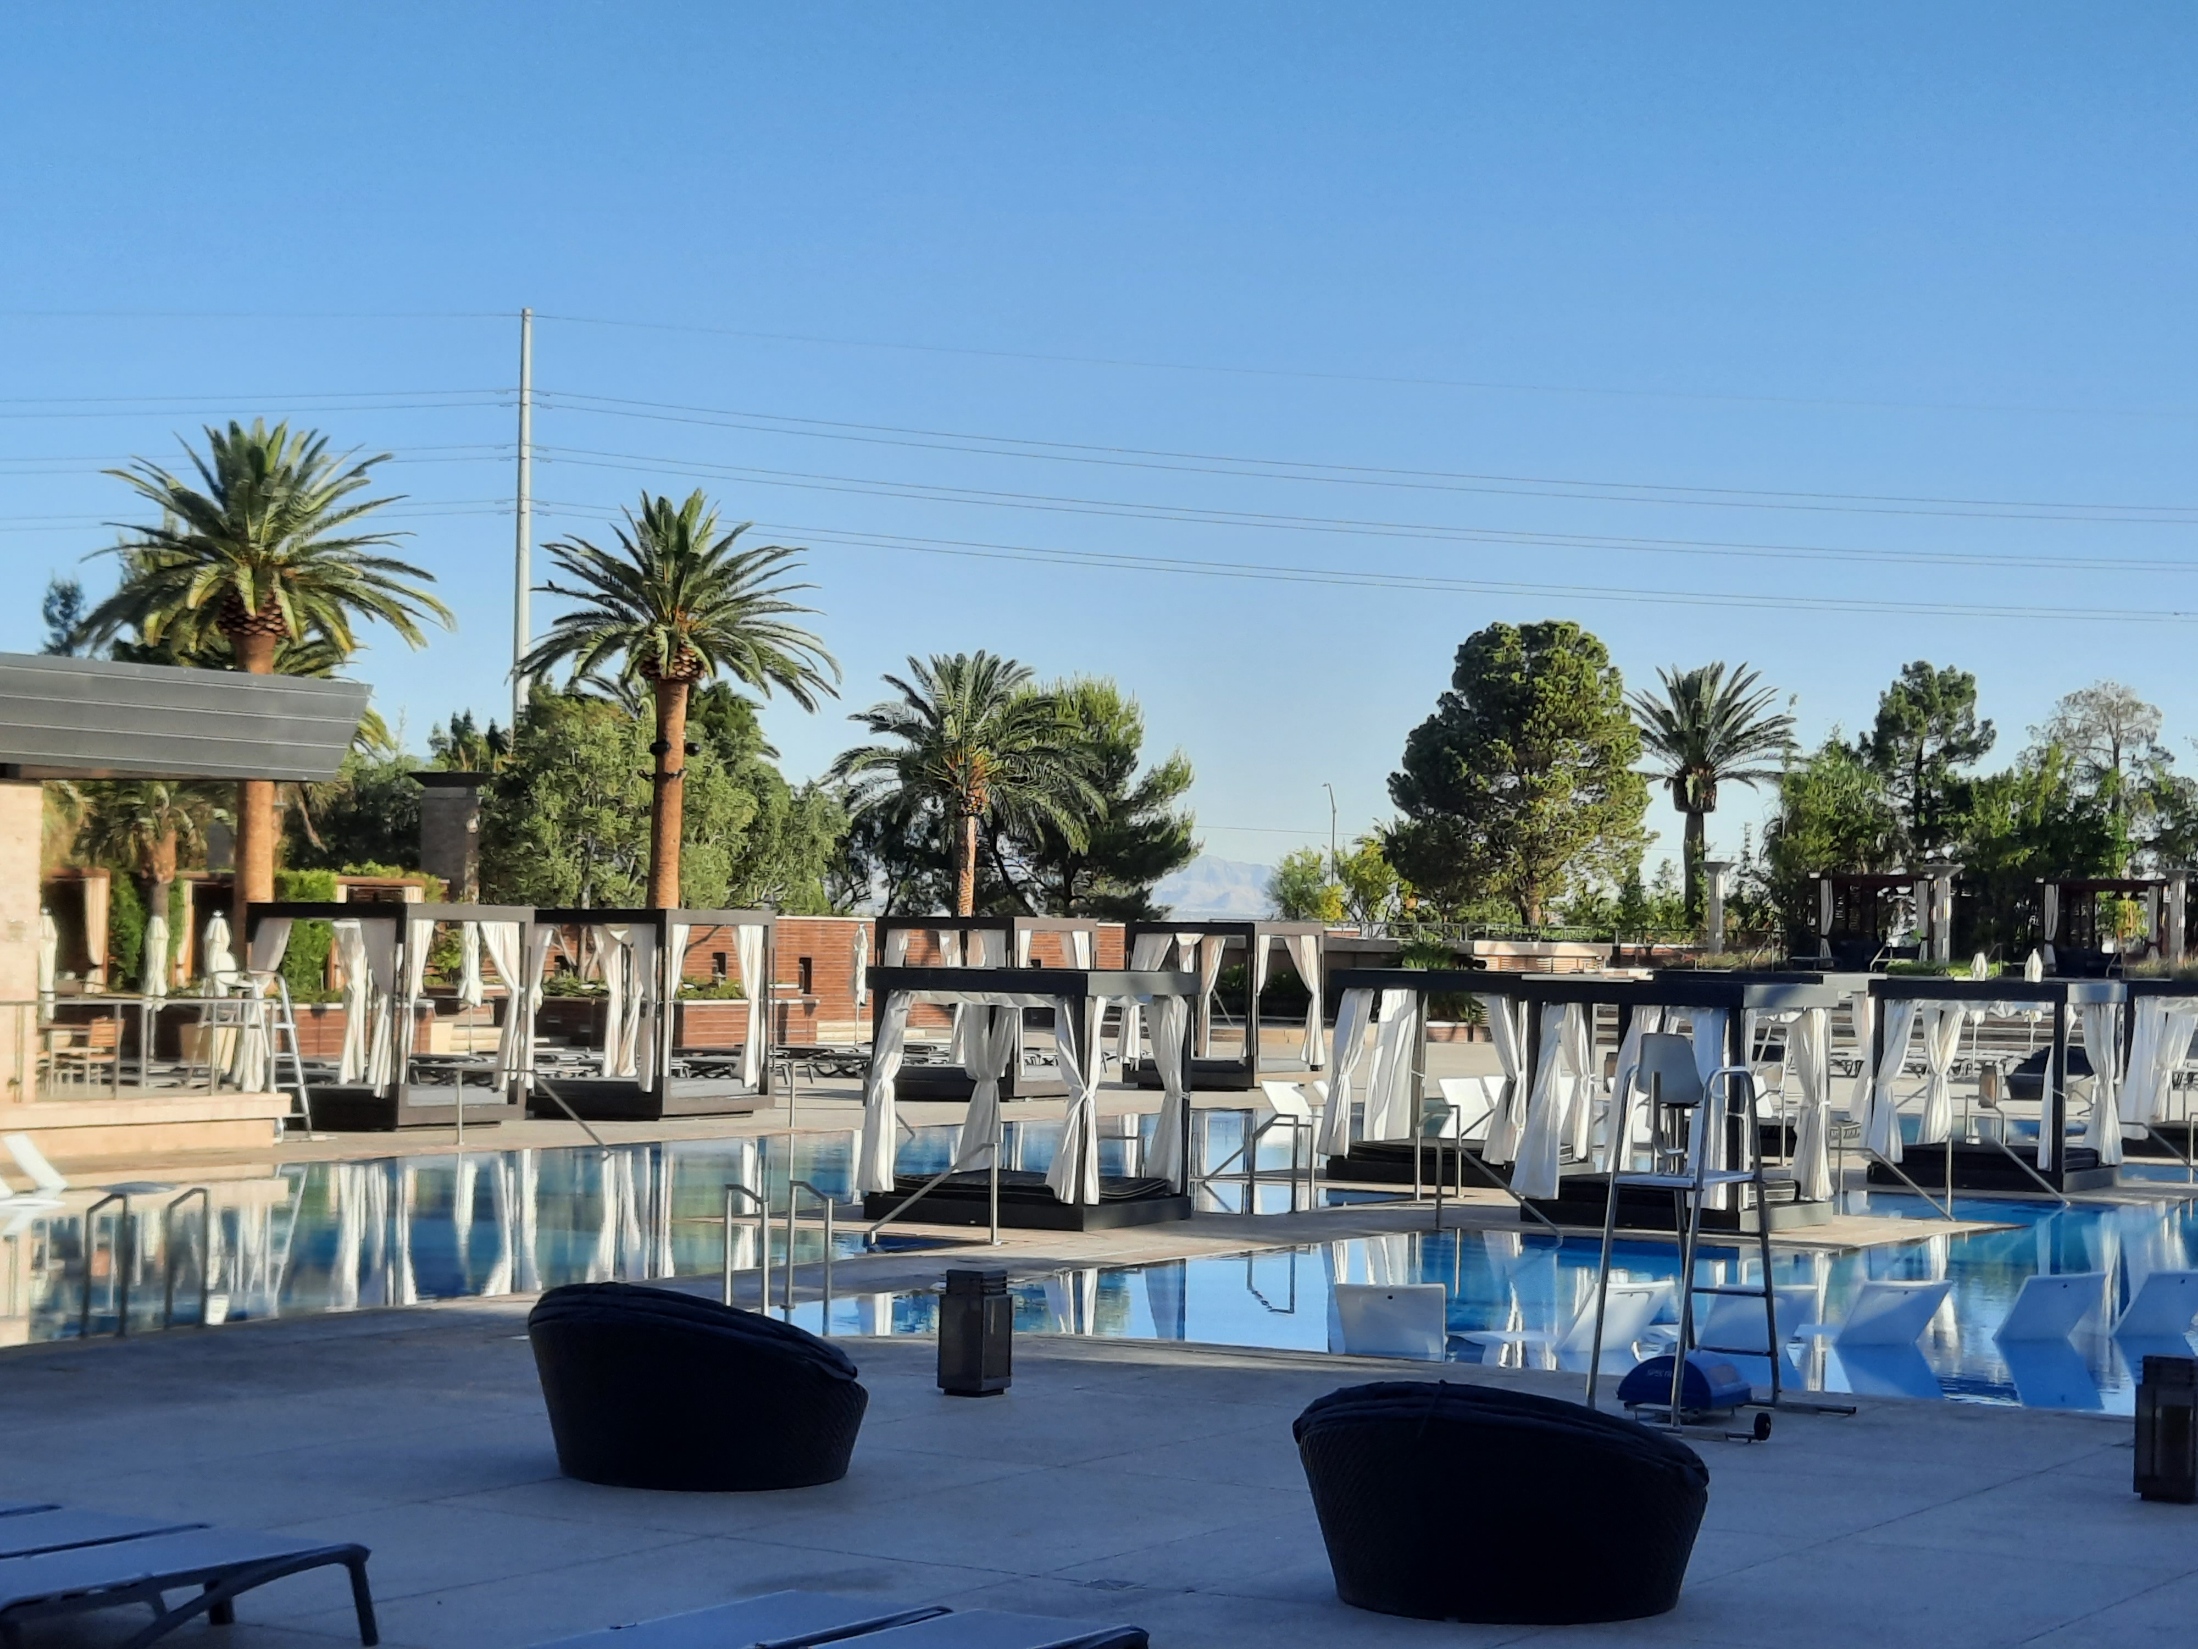 Paris Las Vegas Pool: Hours and Amenities - Midlife Miles